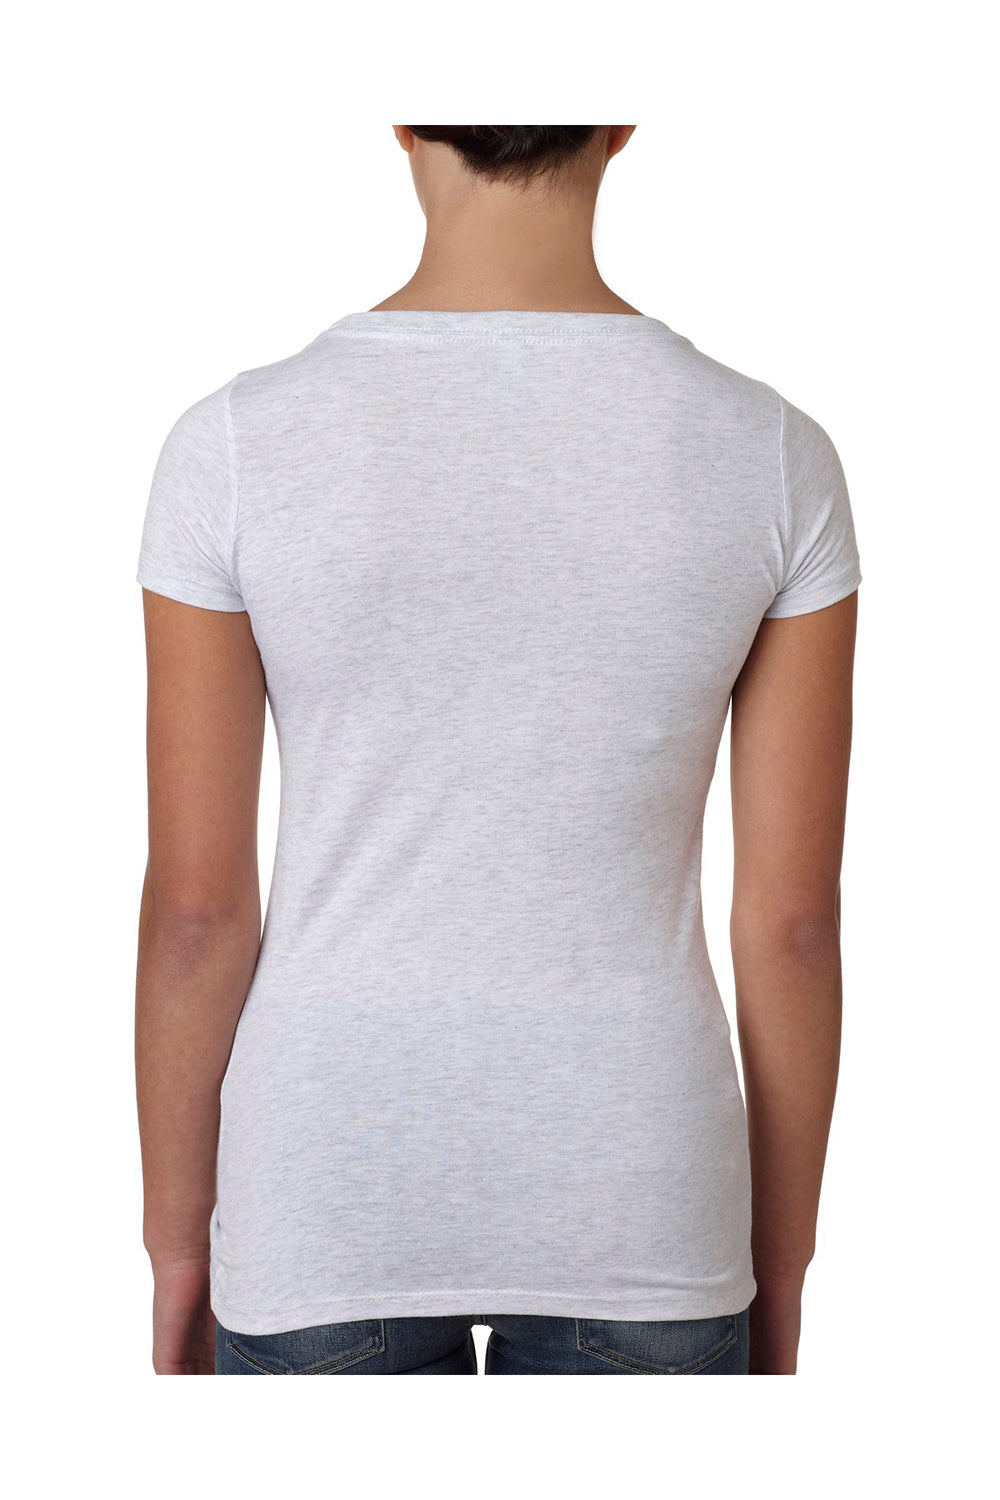 Next Level 6730 Womens Jersey Short Sleeve Scoop Neck T-Shirt Heather White Back